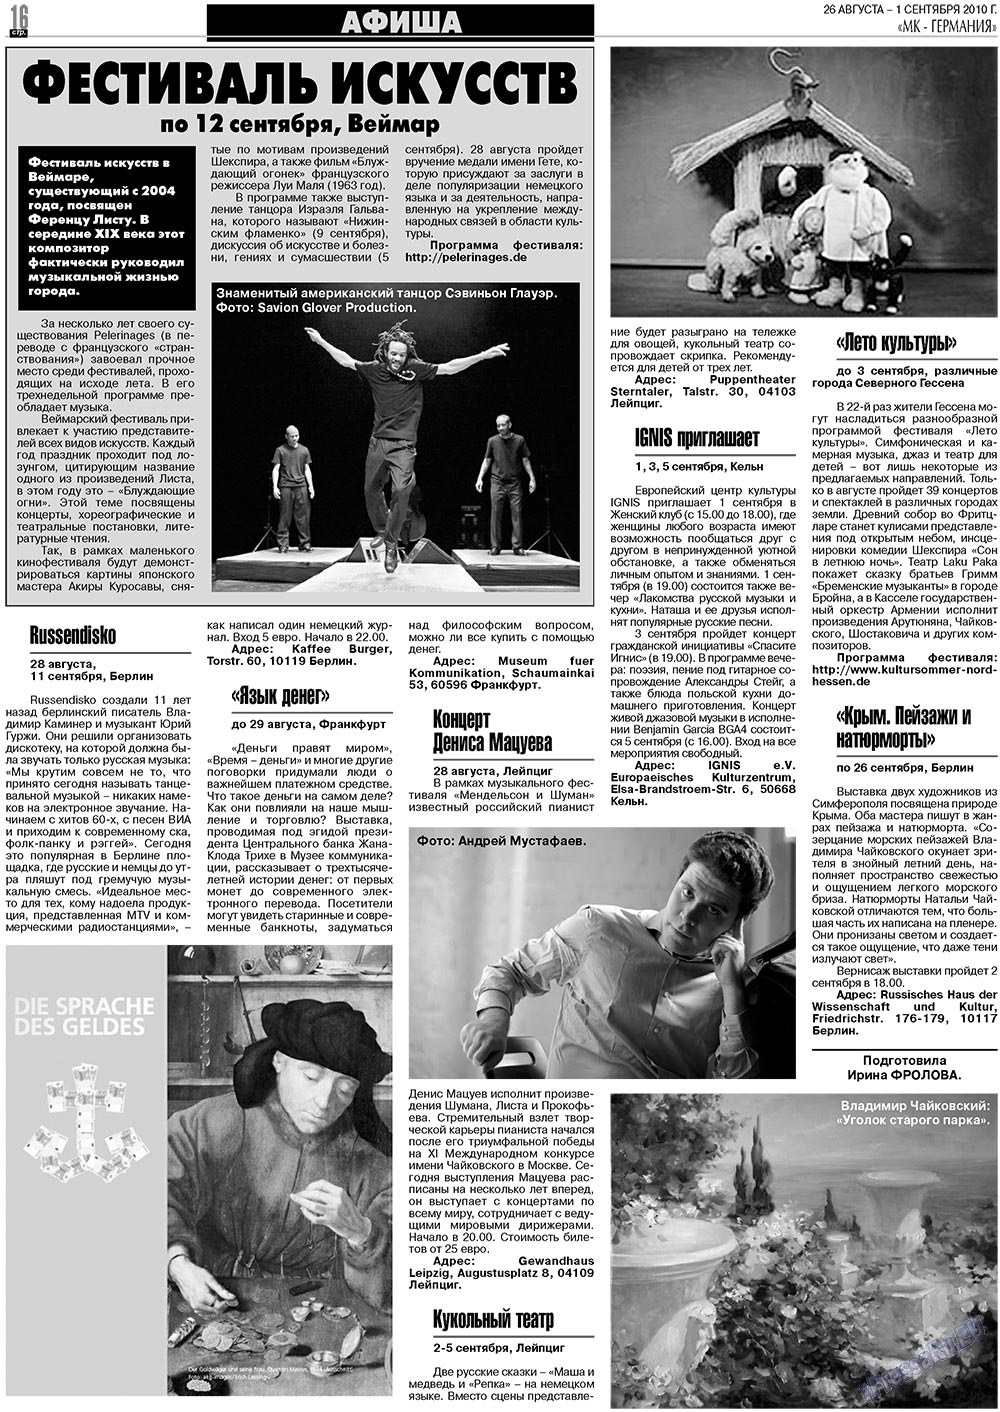 МК-Германия, газета. 2010 №35 стр.16